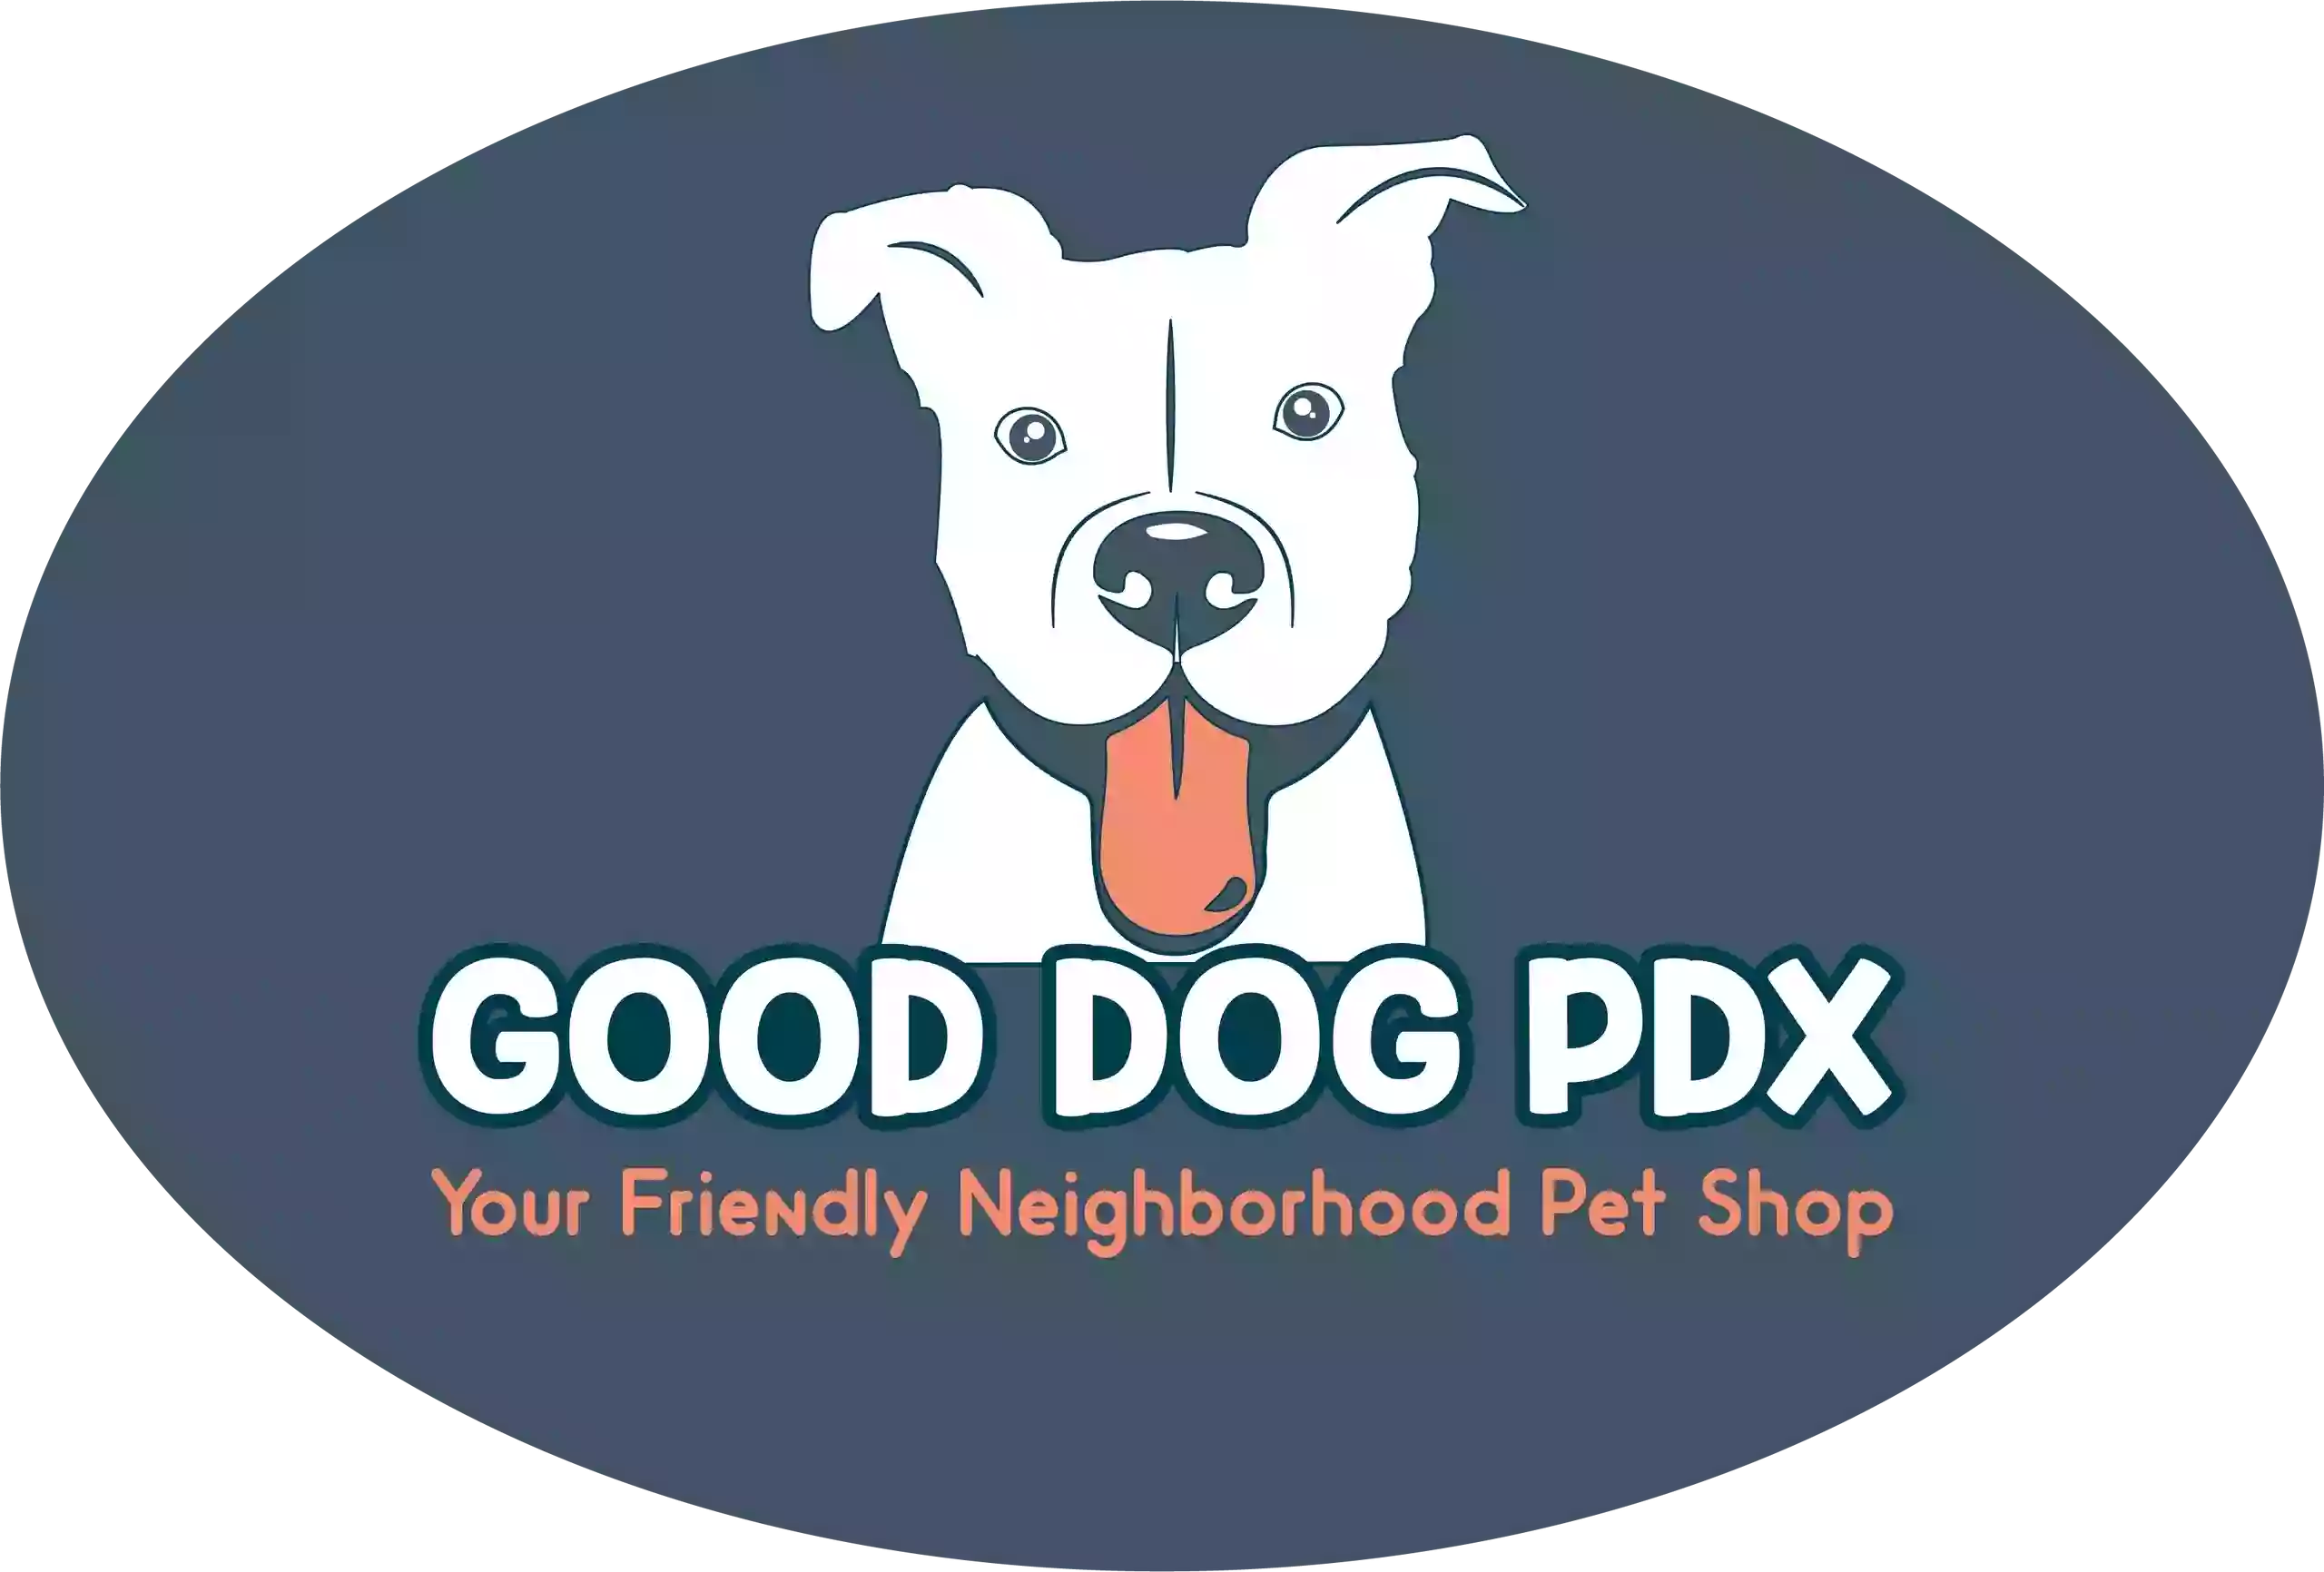 Good Dog PDX